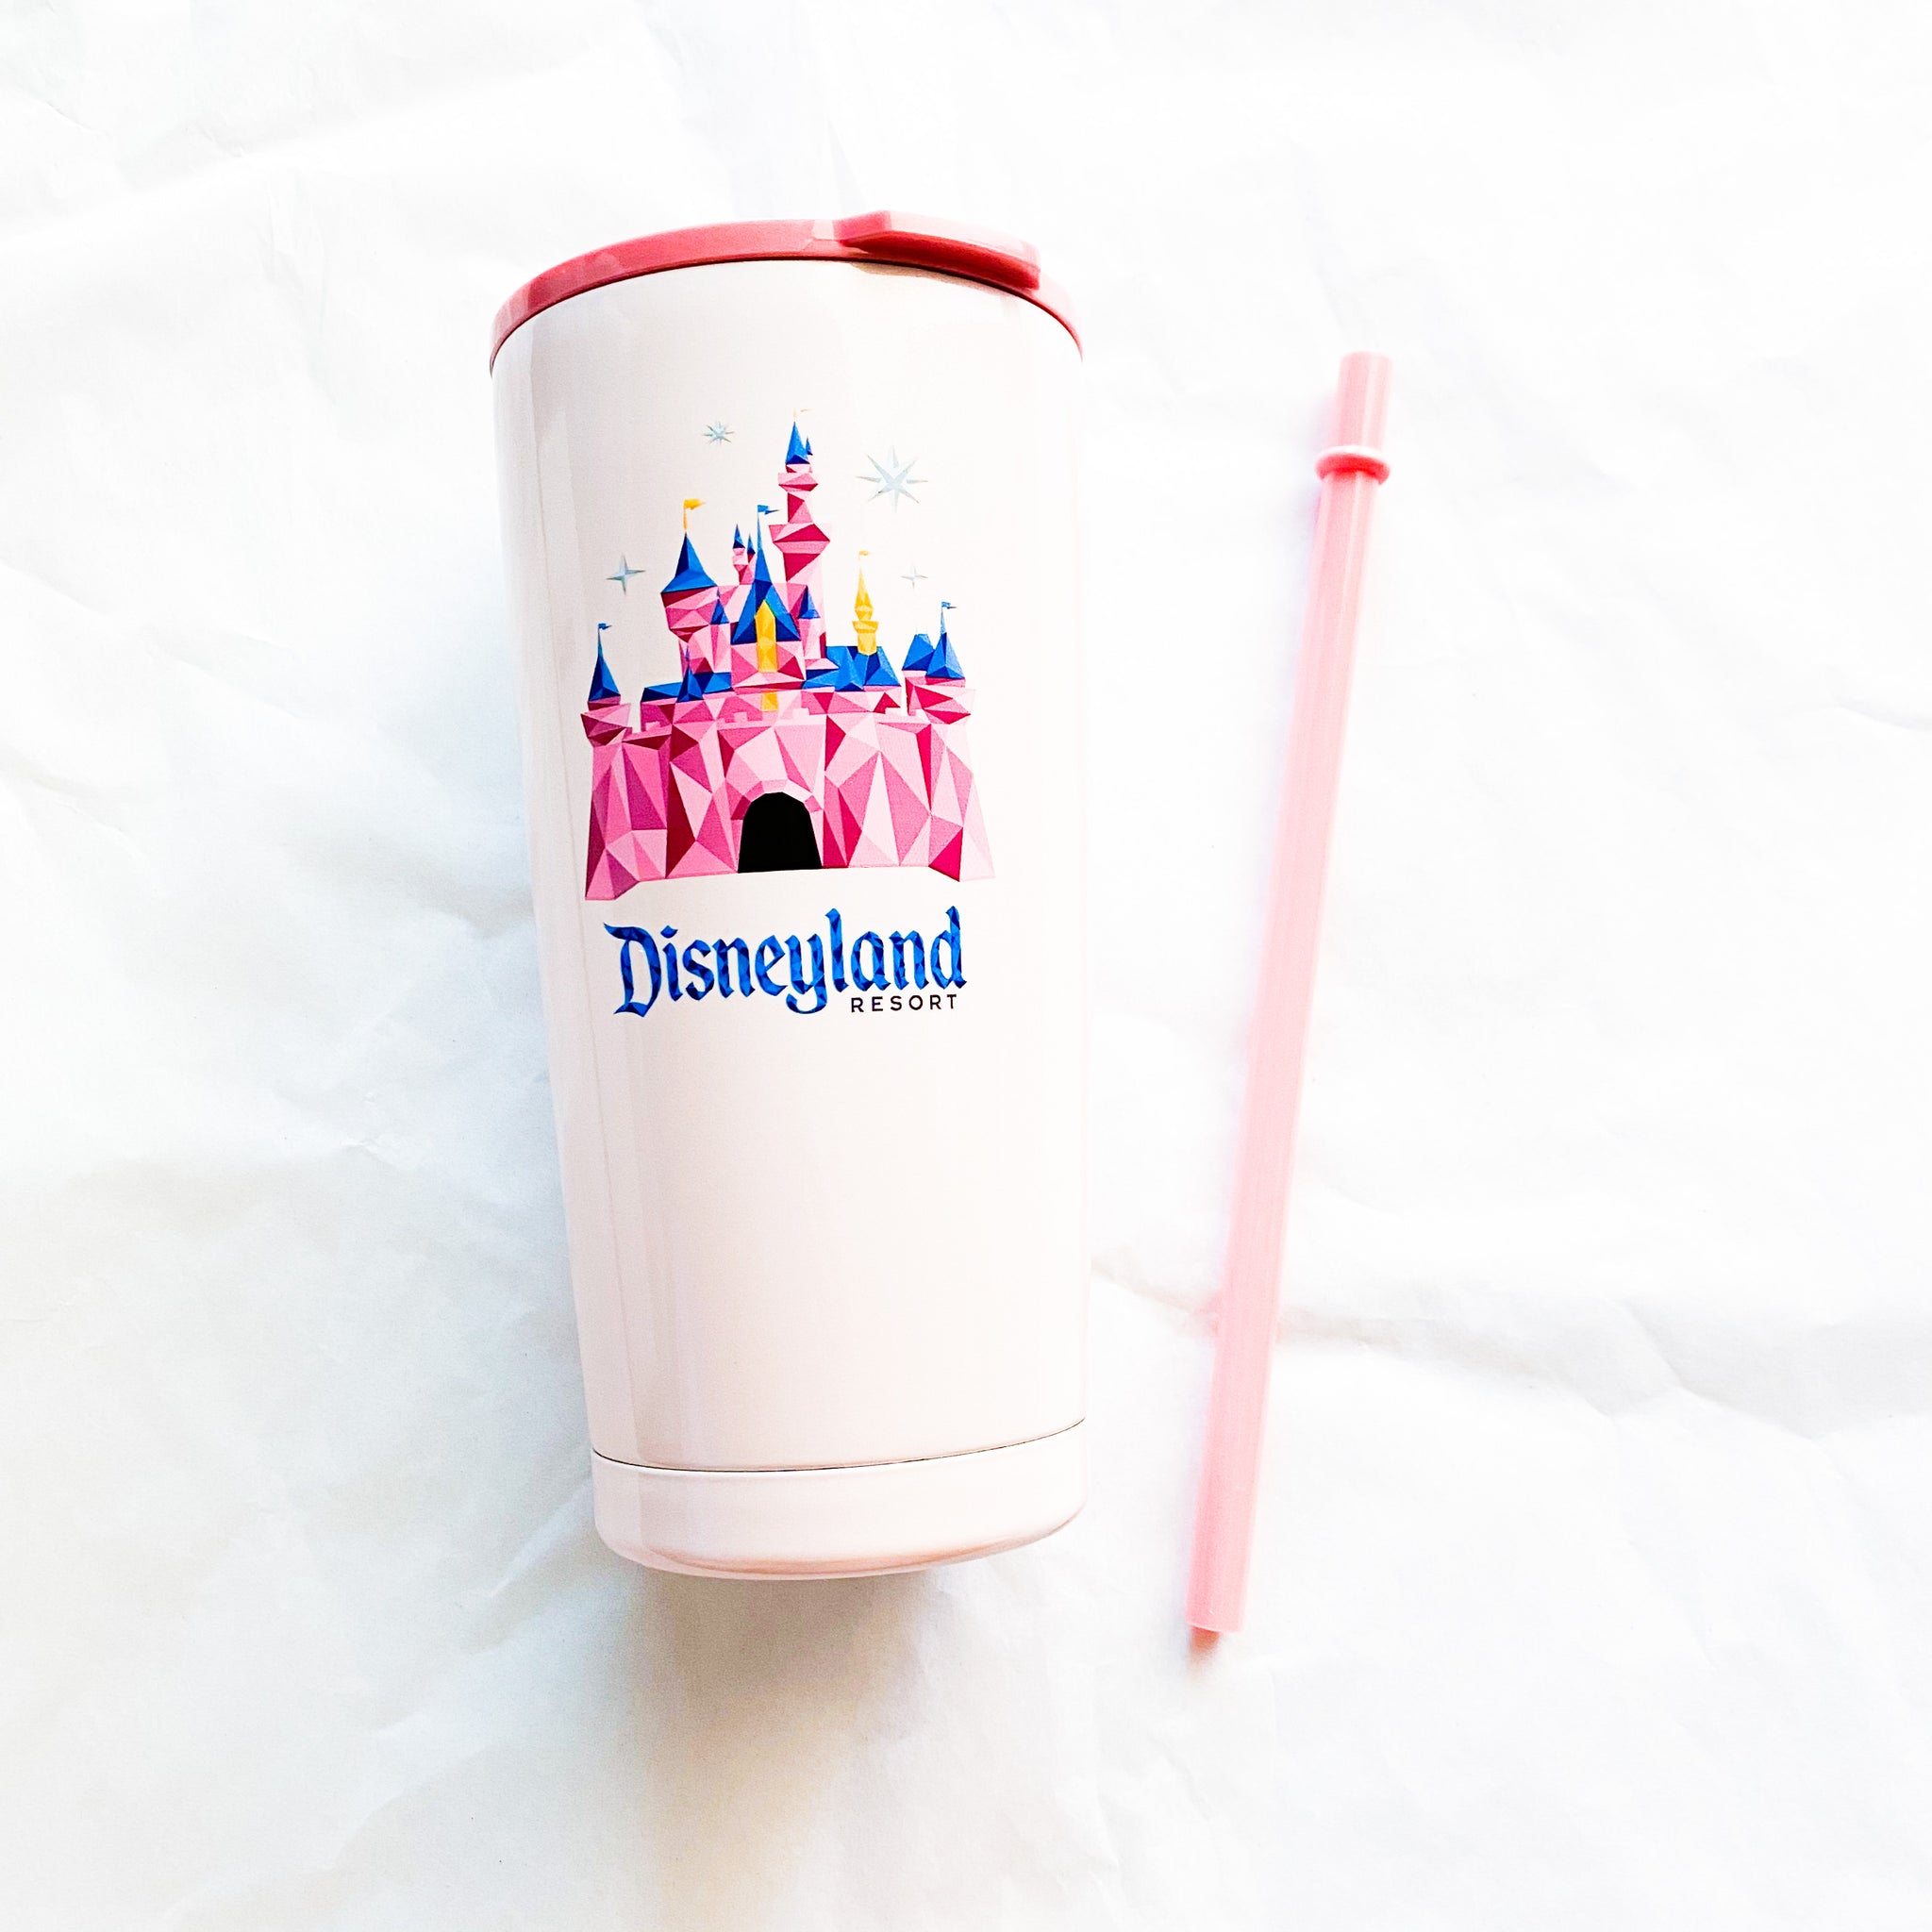 PHOTOS: Starbucks' Popular Pink Tumbler Has Made Its Way to Disneyland!